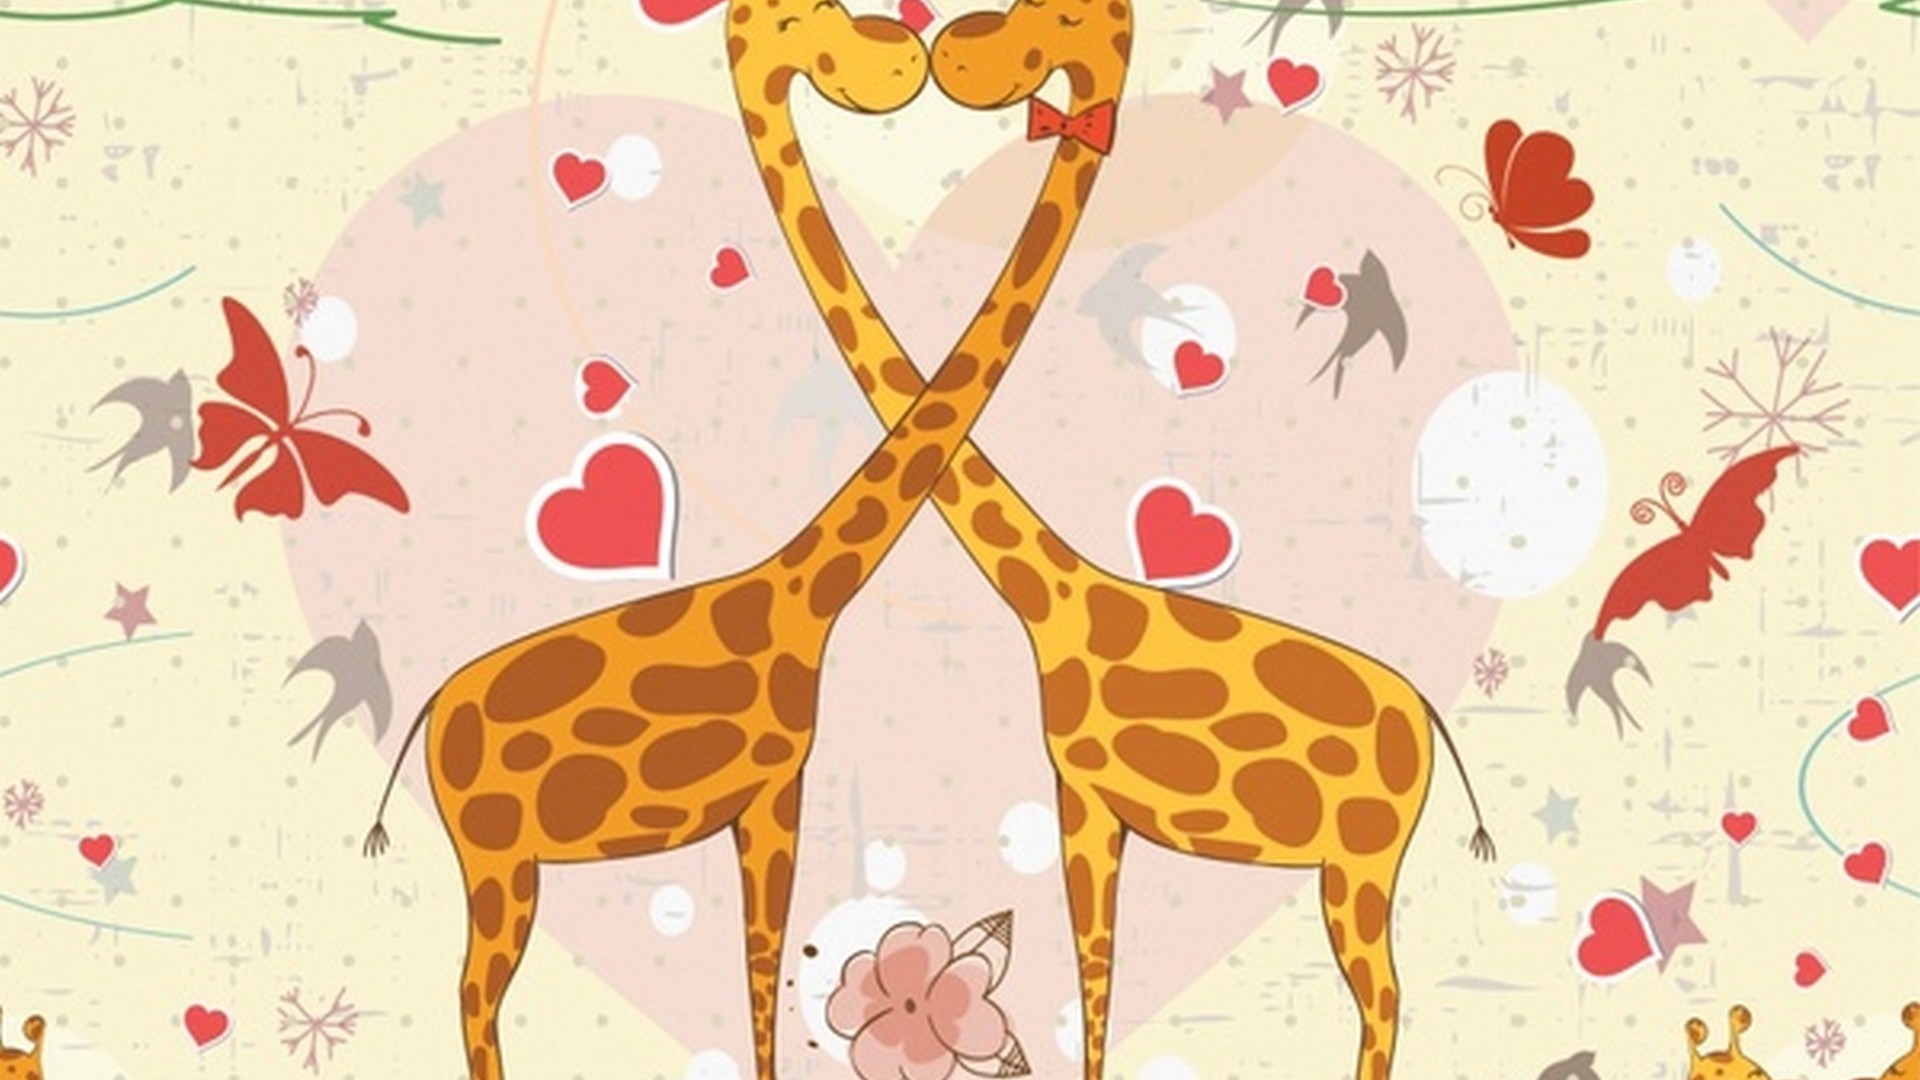 Cute Giraffe Cartoon Wallpaper